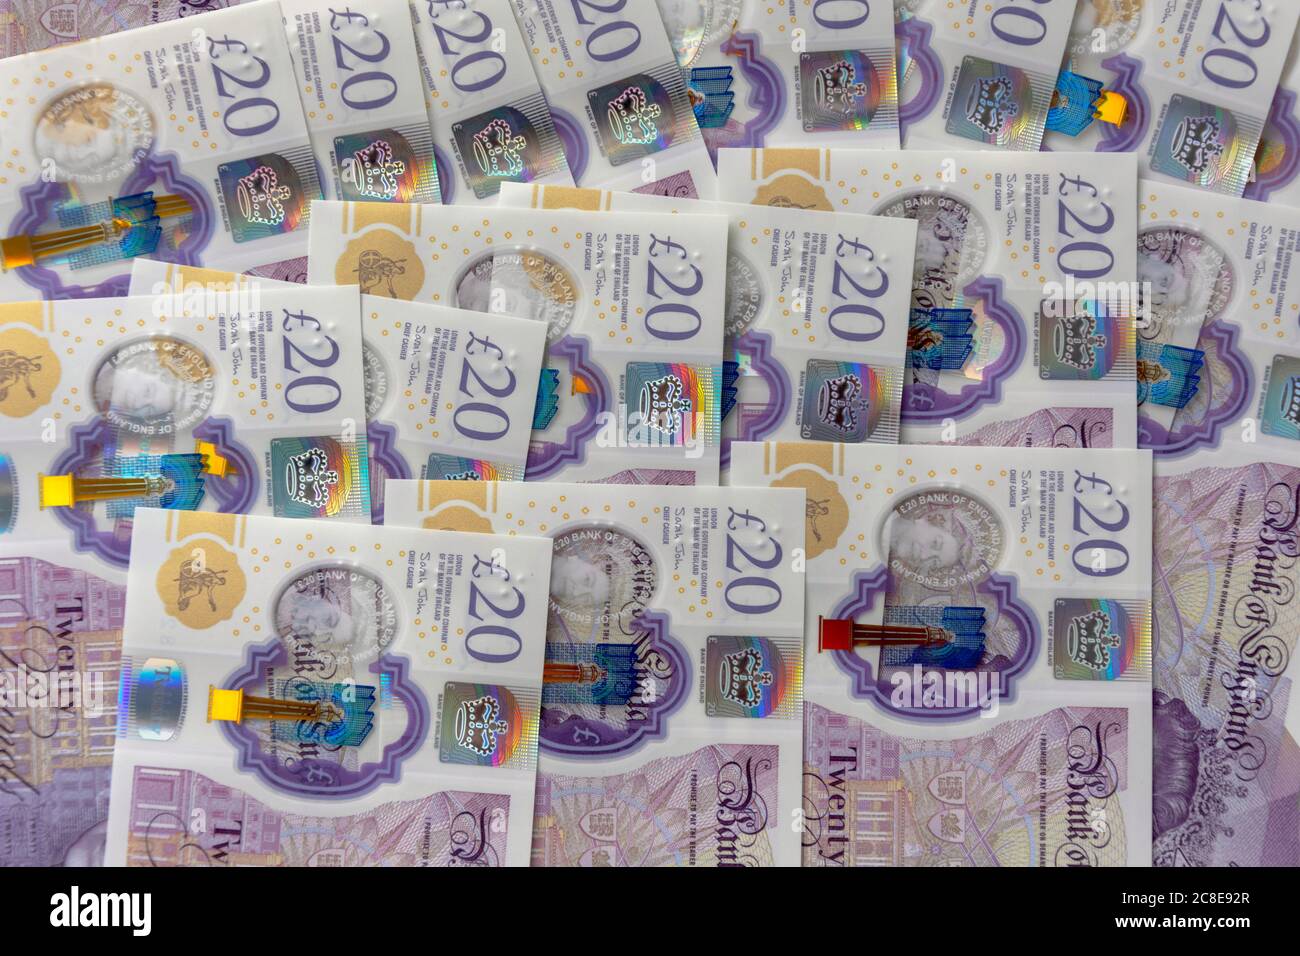 Close-up of new English £20 notes, Greater London, England, United Kingdom Stock Photo